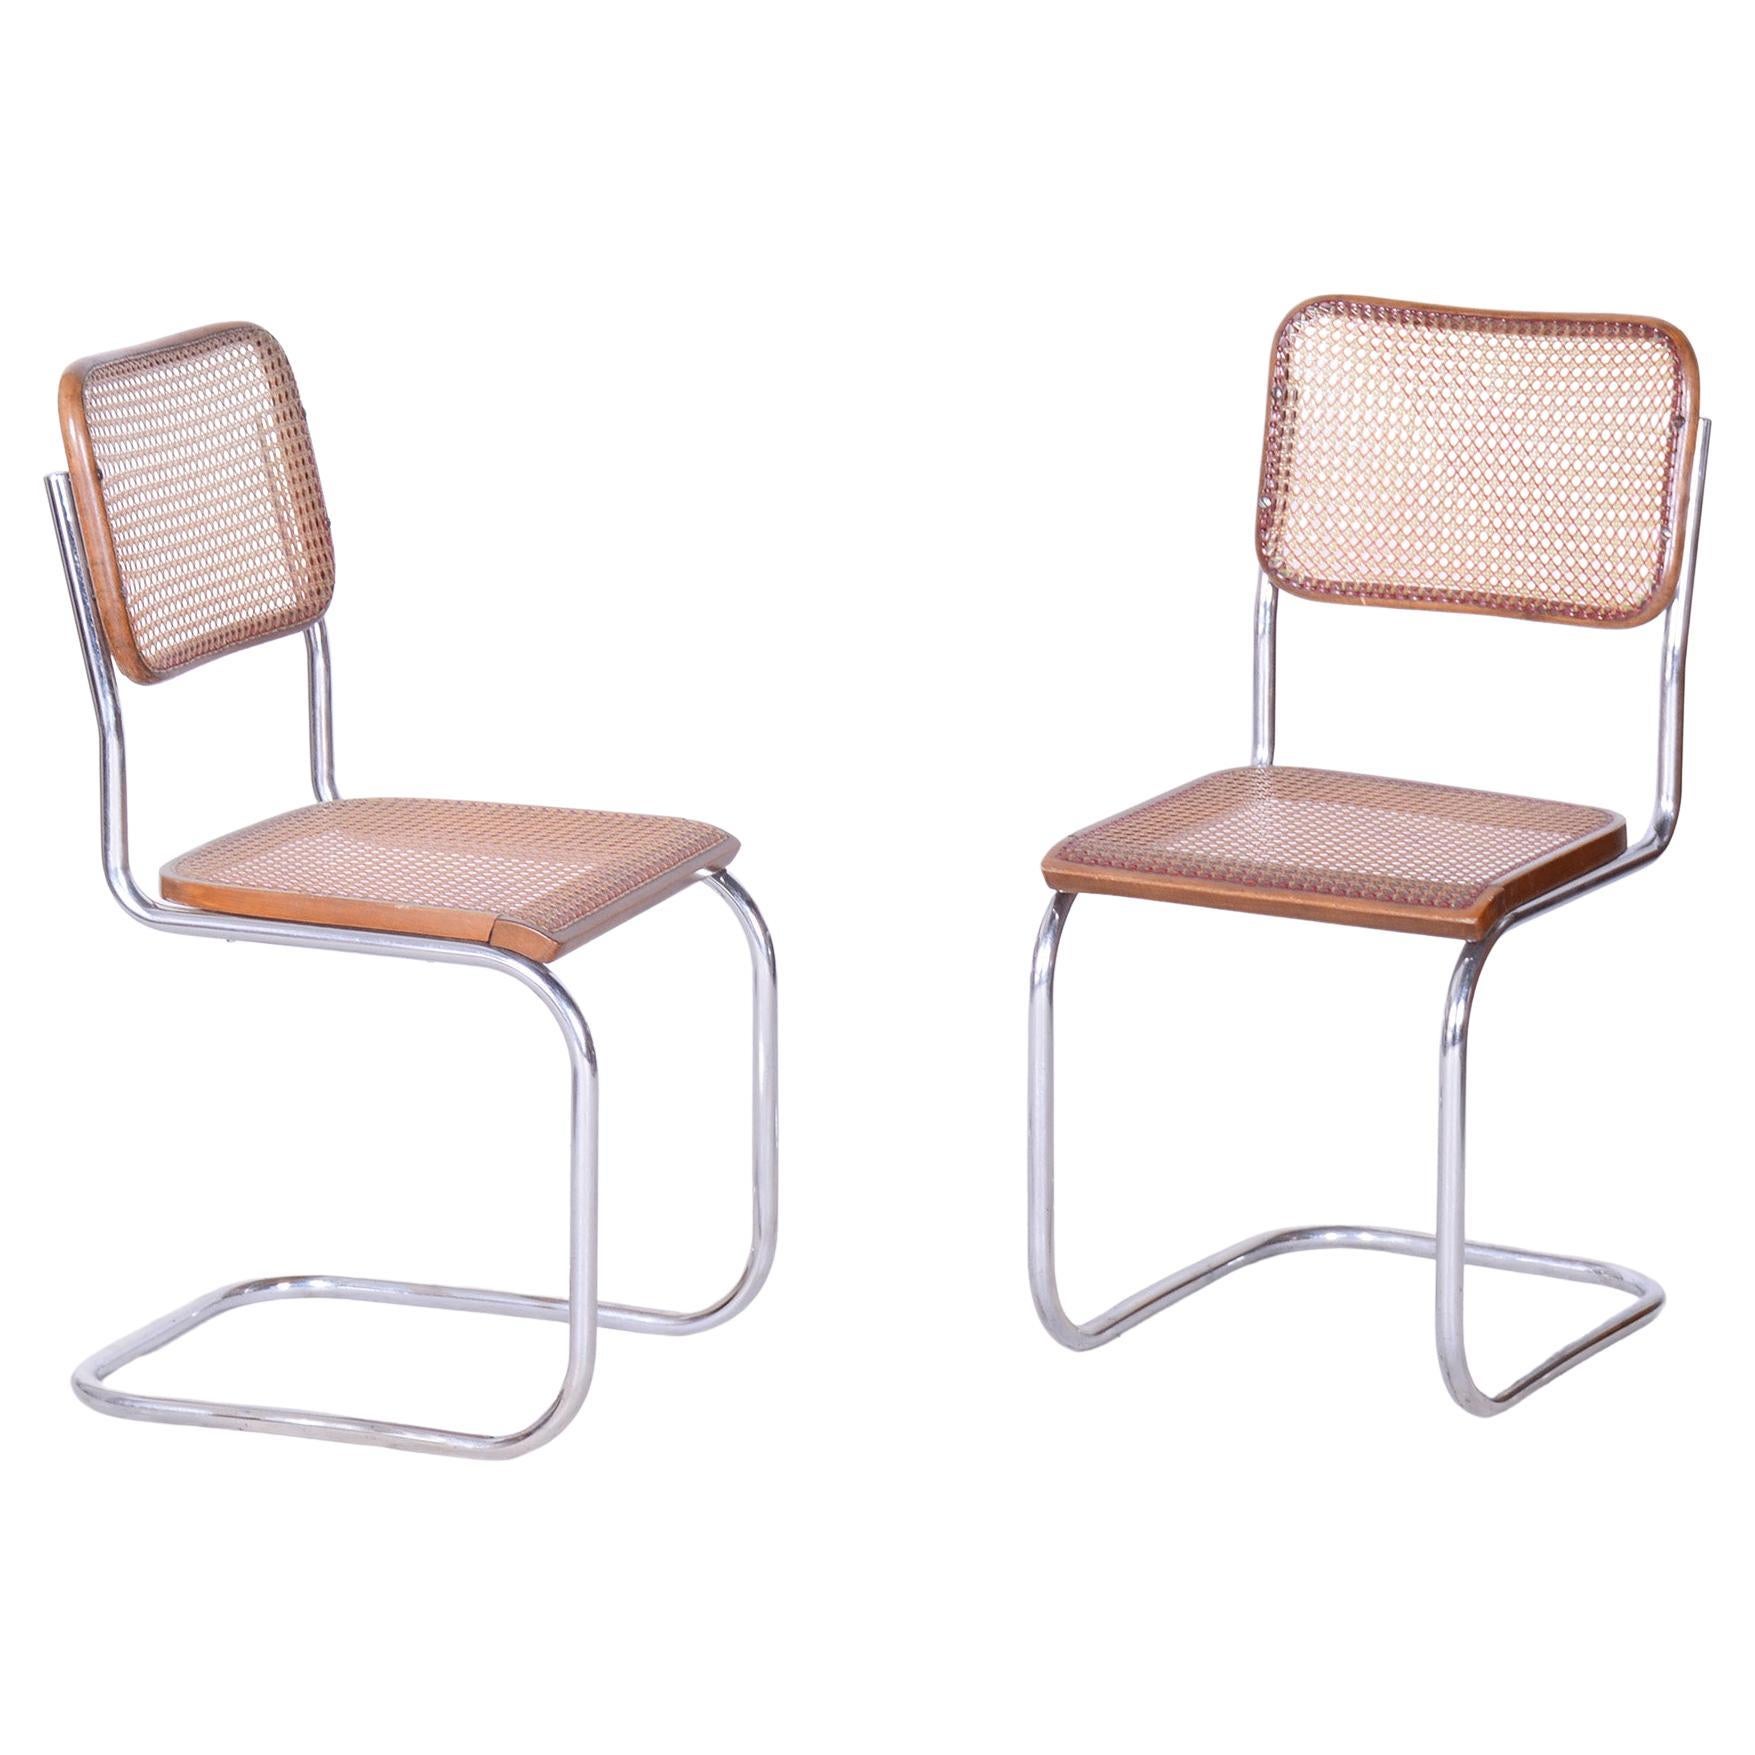 Restored Bauhaus Pair of Chairs, Robert Slezak, Chrome, Beech, Czechia, 1930s For Sale